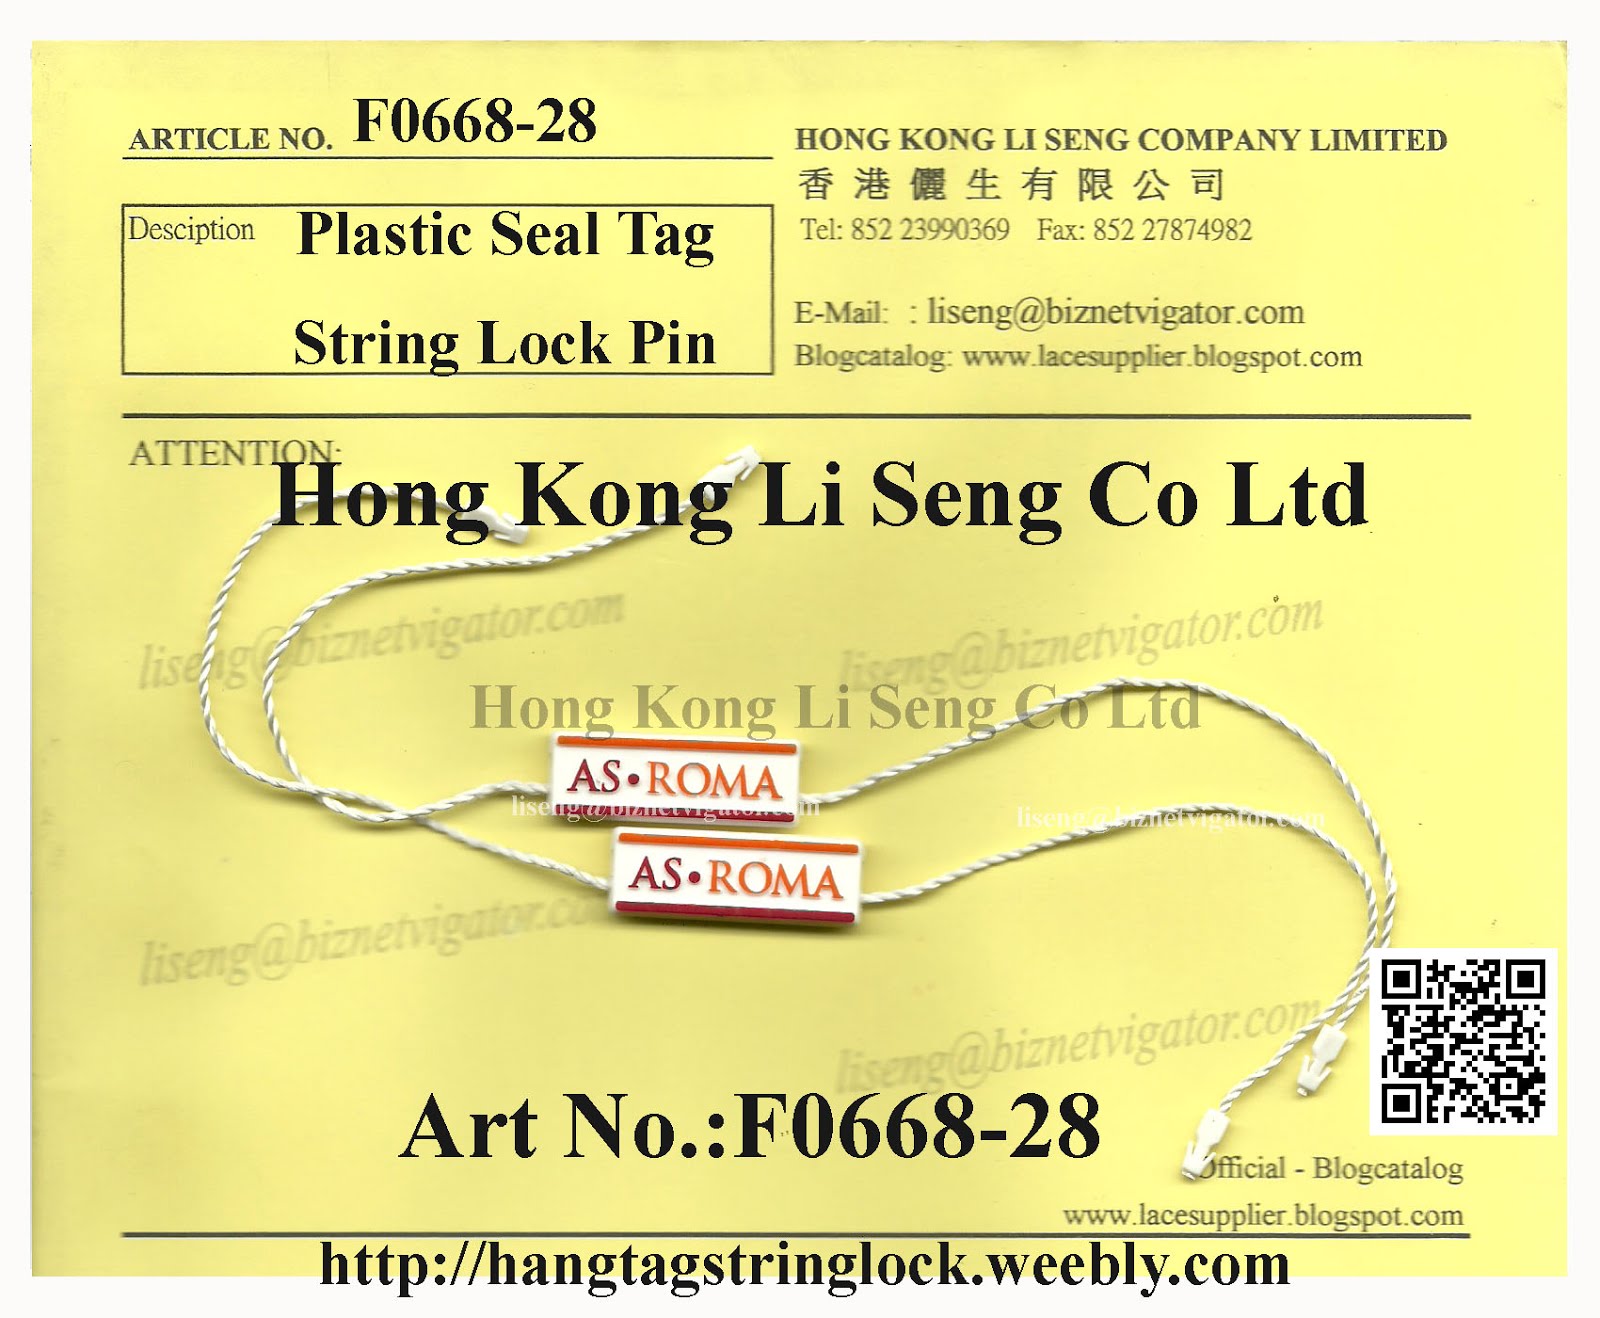 AS.ROMA - Trademark Label Plastic String Lock Pin